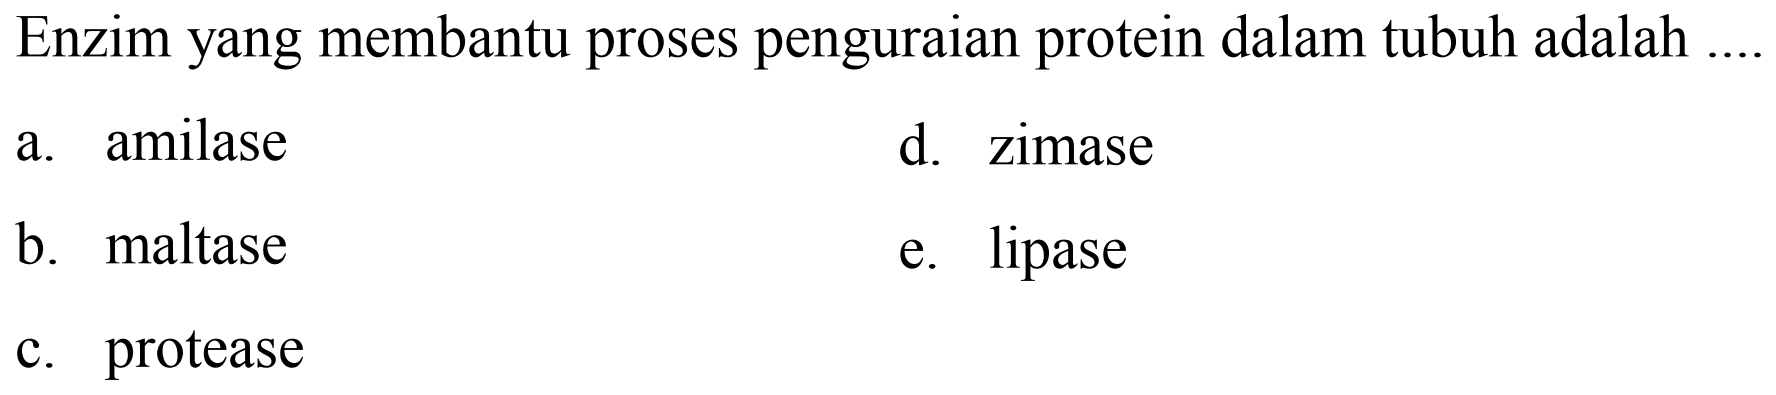 Enzim yang membantu proses penguraian protein dalam tubuh adalah
a. amilase
d. zimase
b. maltase
e. lipase
c. protease